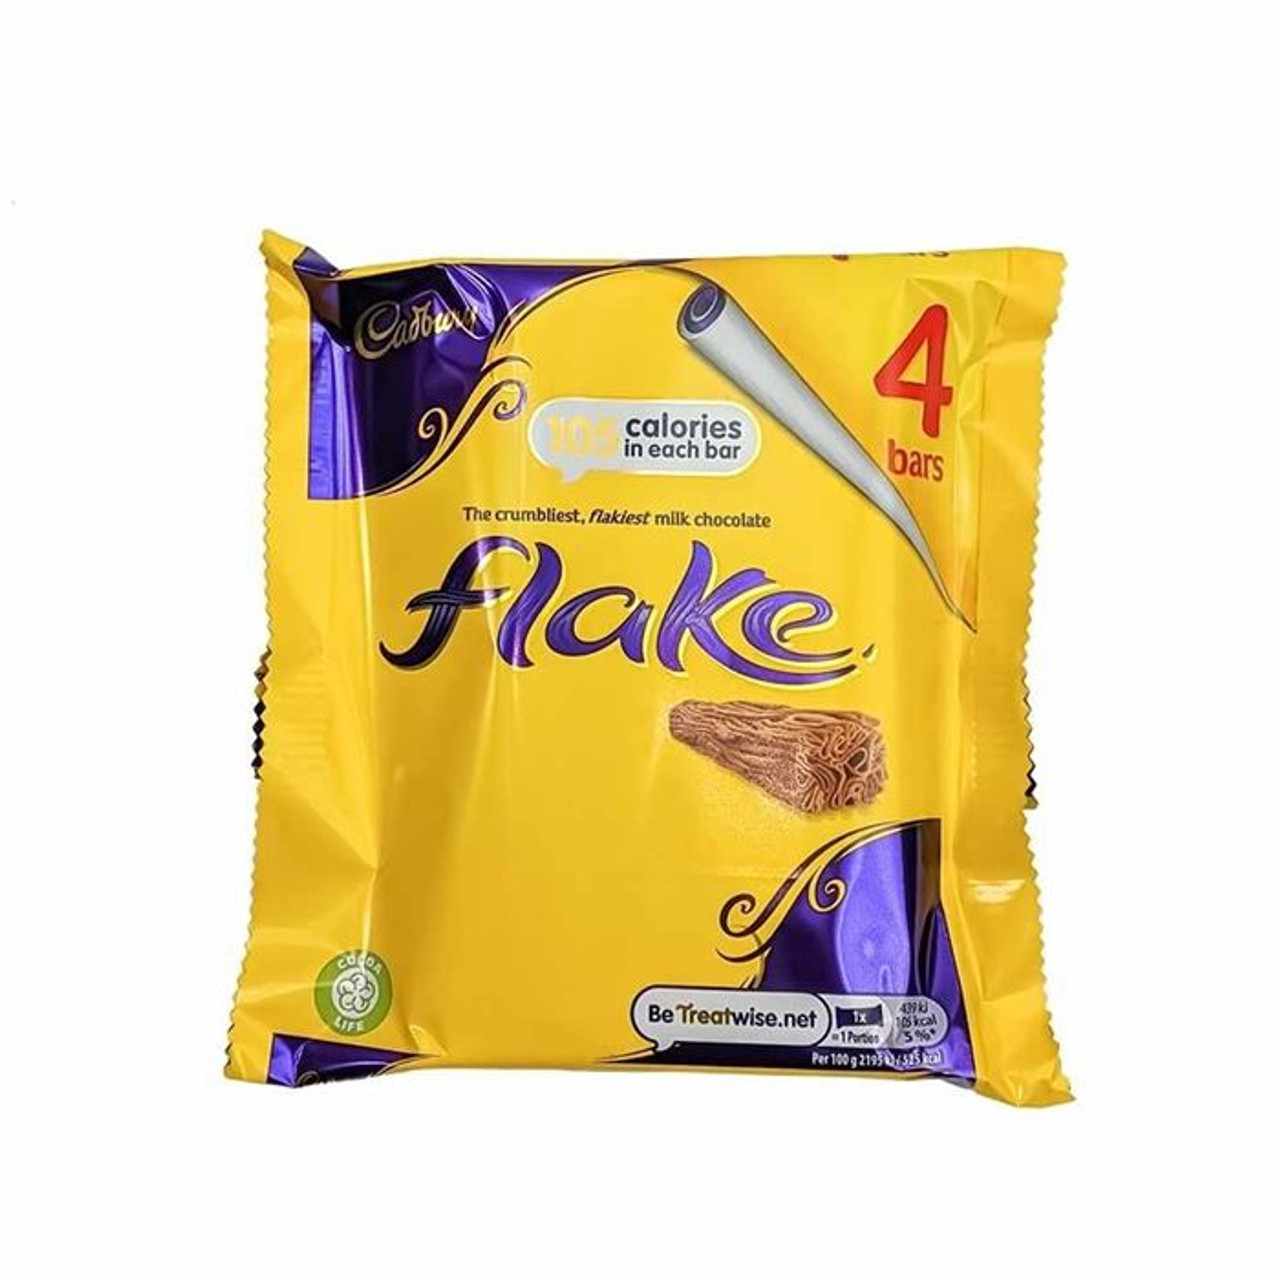 Cadbury Flake Bar, 48 Pack (32g each), 1 unit - Ralphs